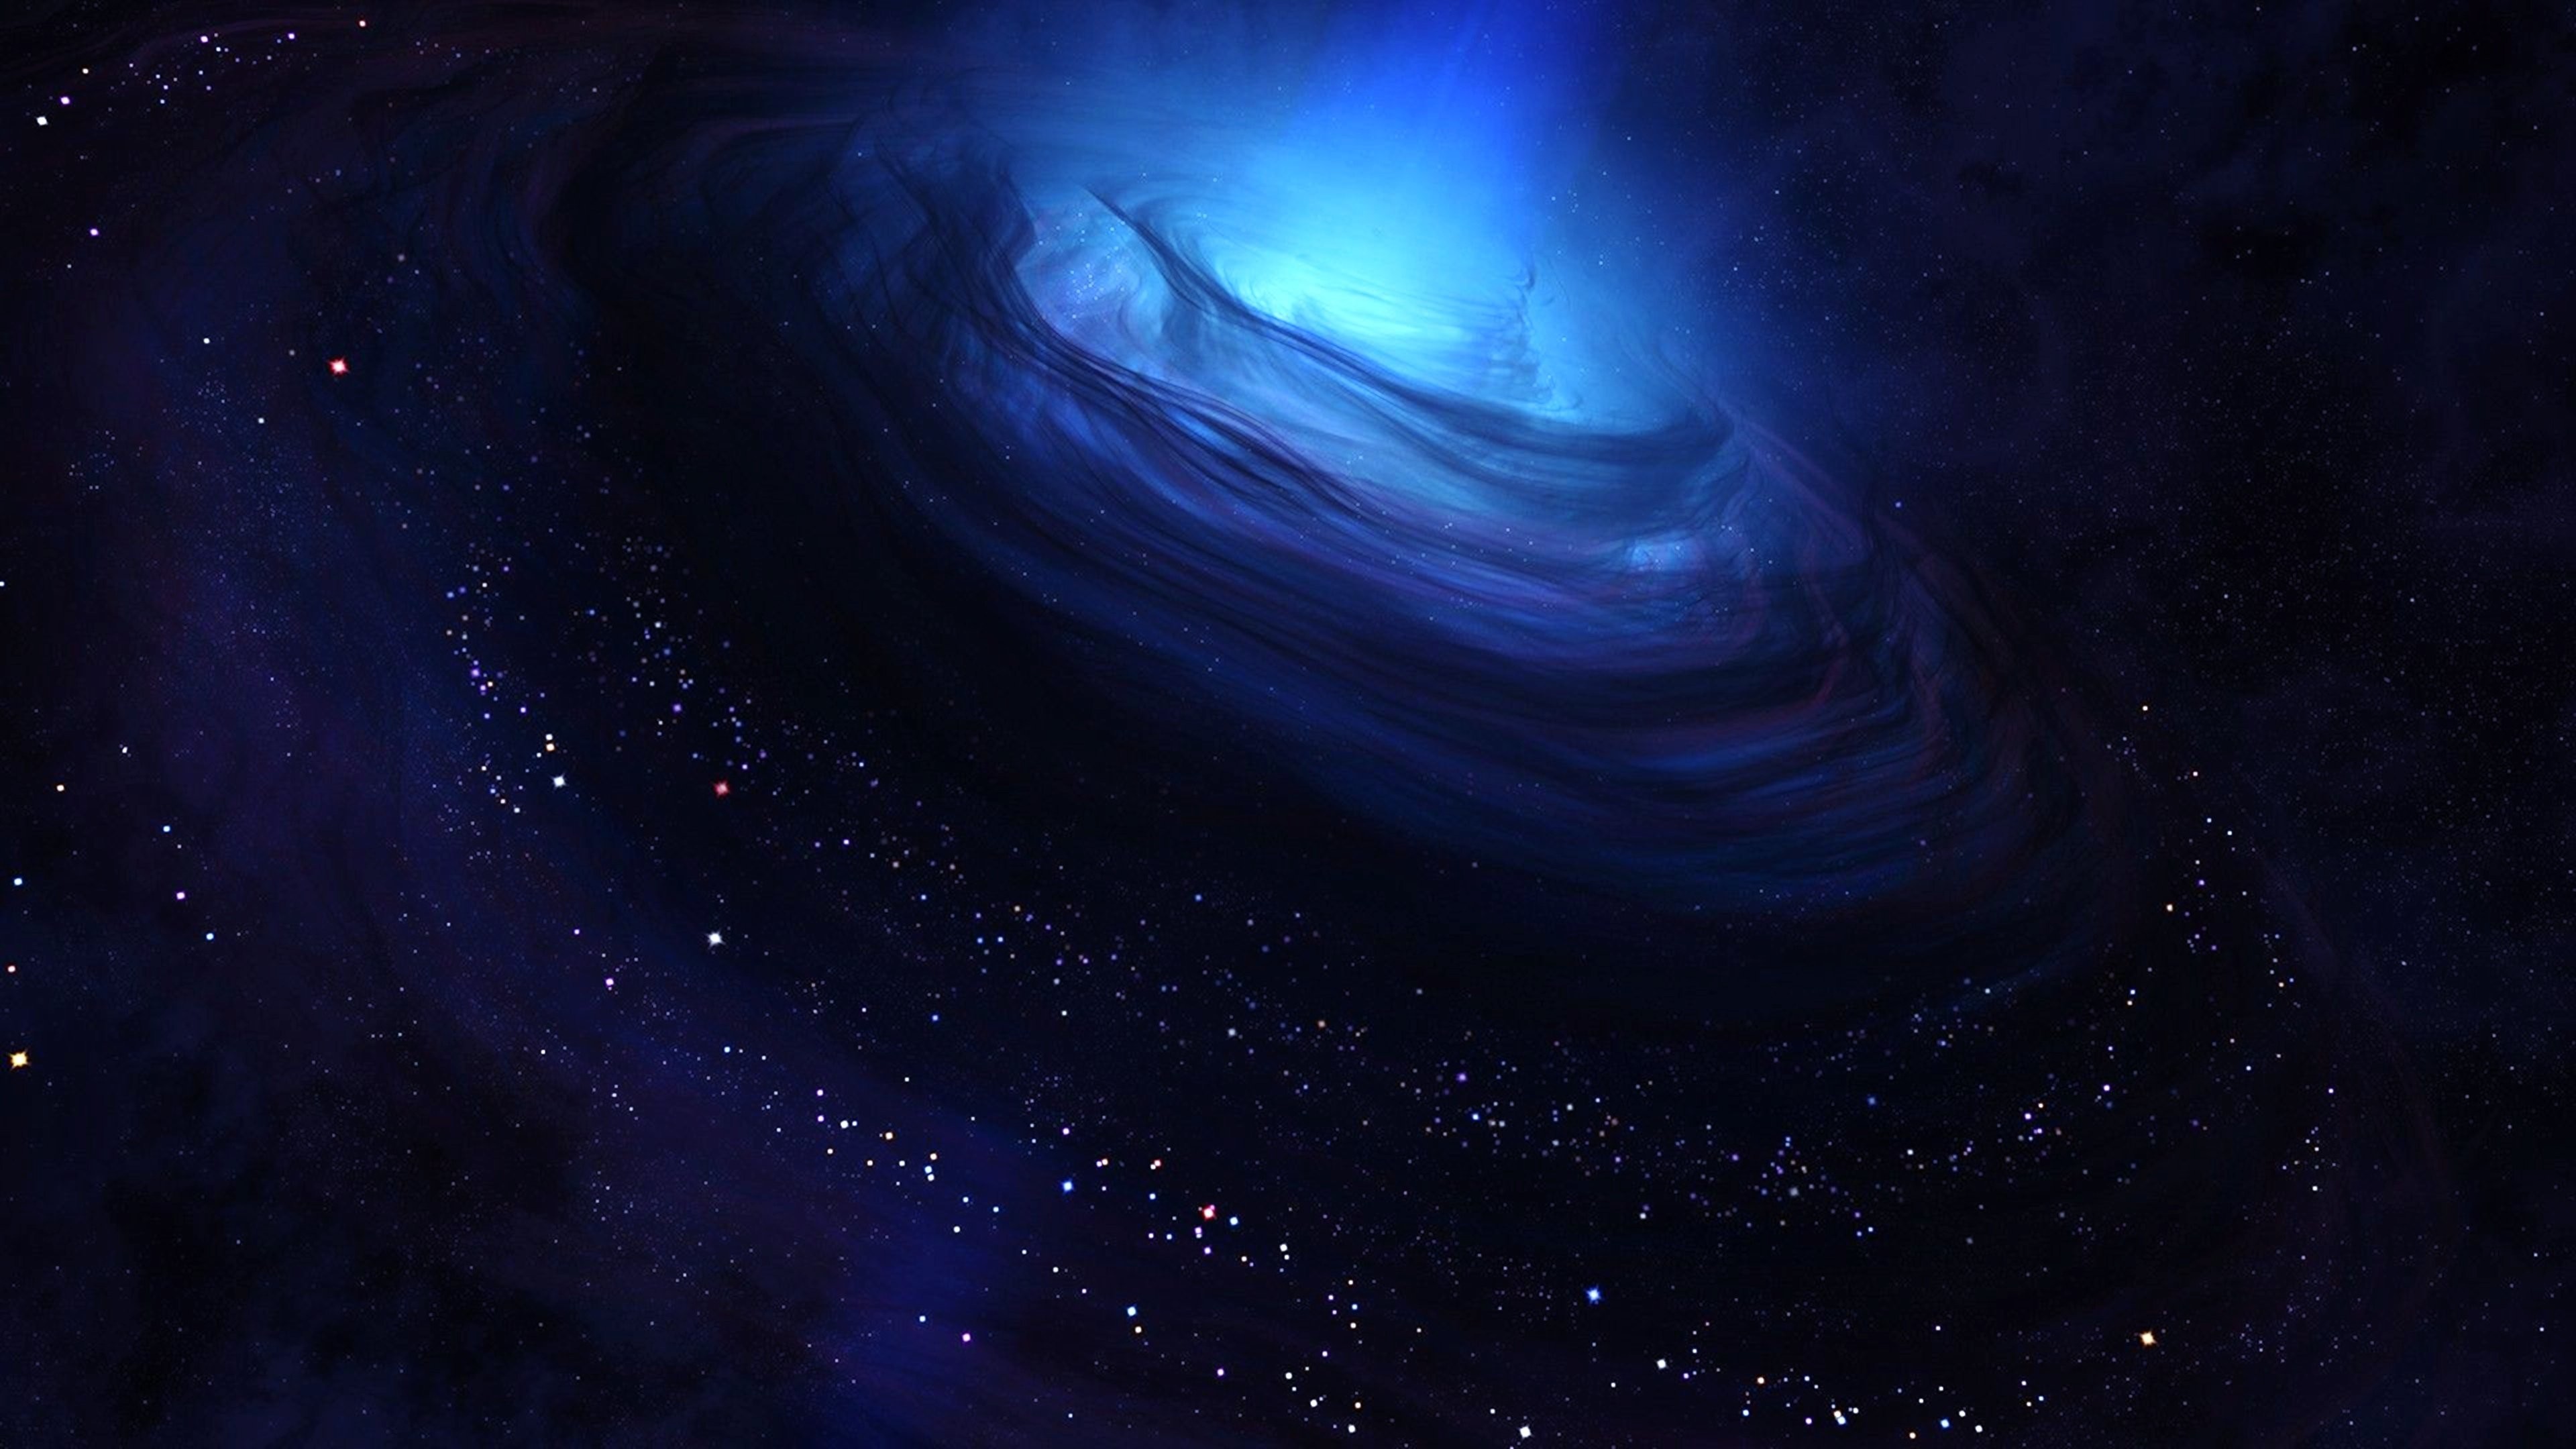 Download 3840x2160 Wallpaper Galaxy, Space, Dark Clouds, Blue, Nebula